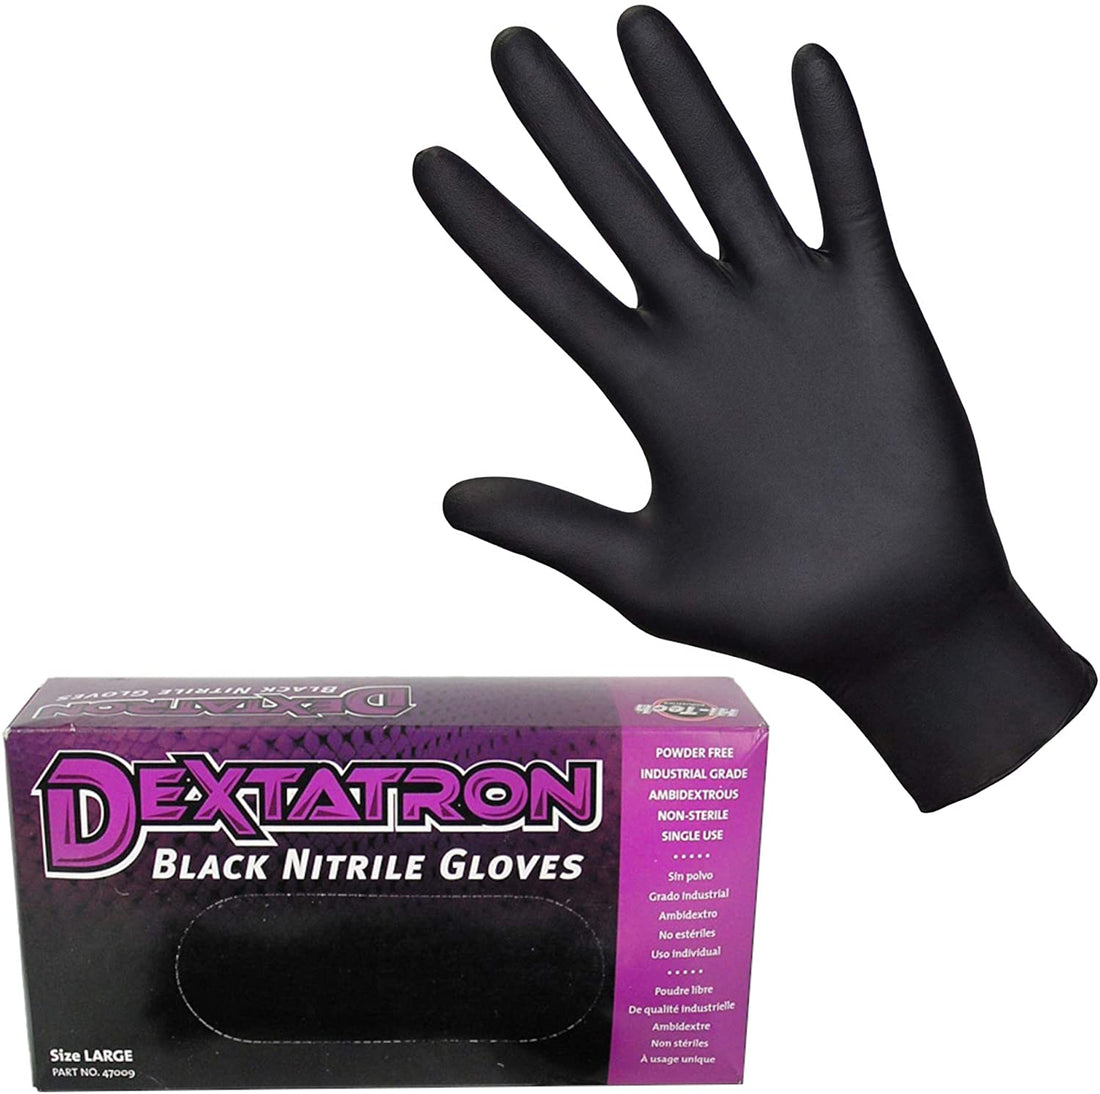 DEXTATRON Non-Sterile Powder Free Black Nitrile Disposable Gloves, 100 Gloves (Medium)) - Detailing Connect